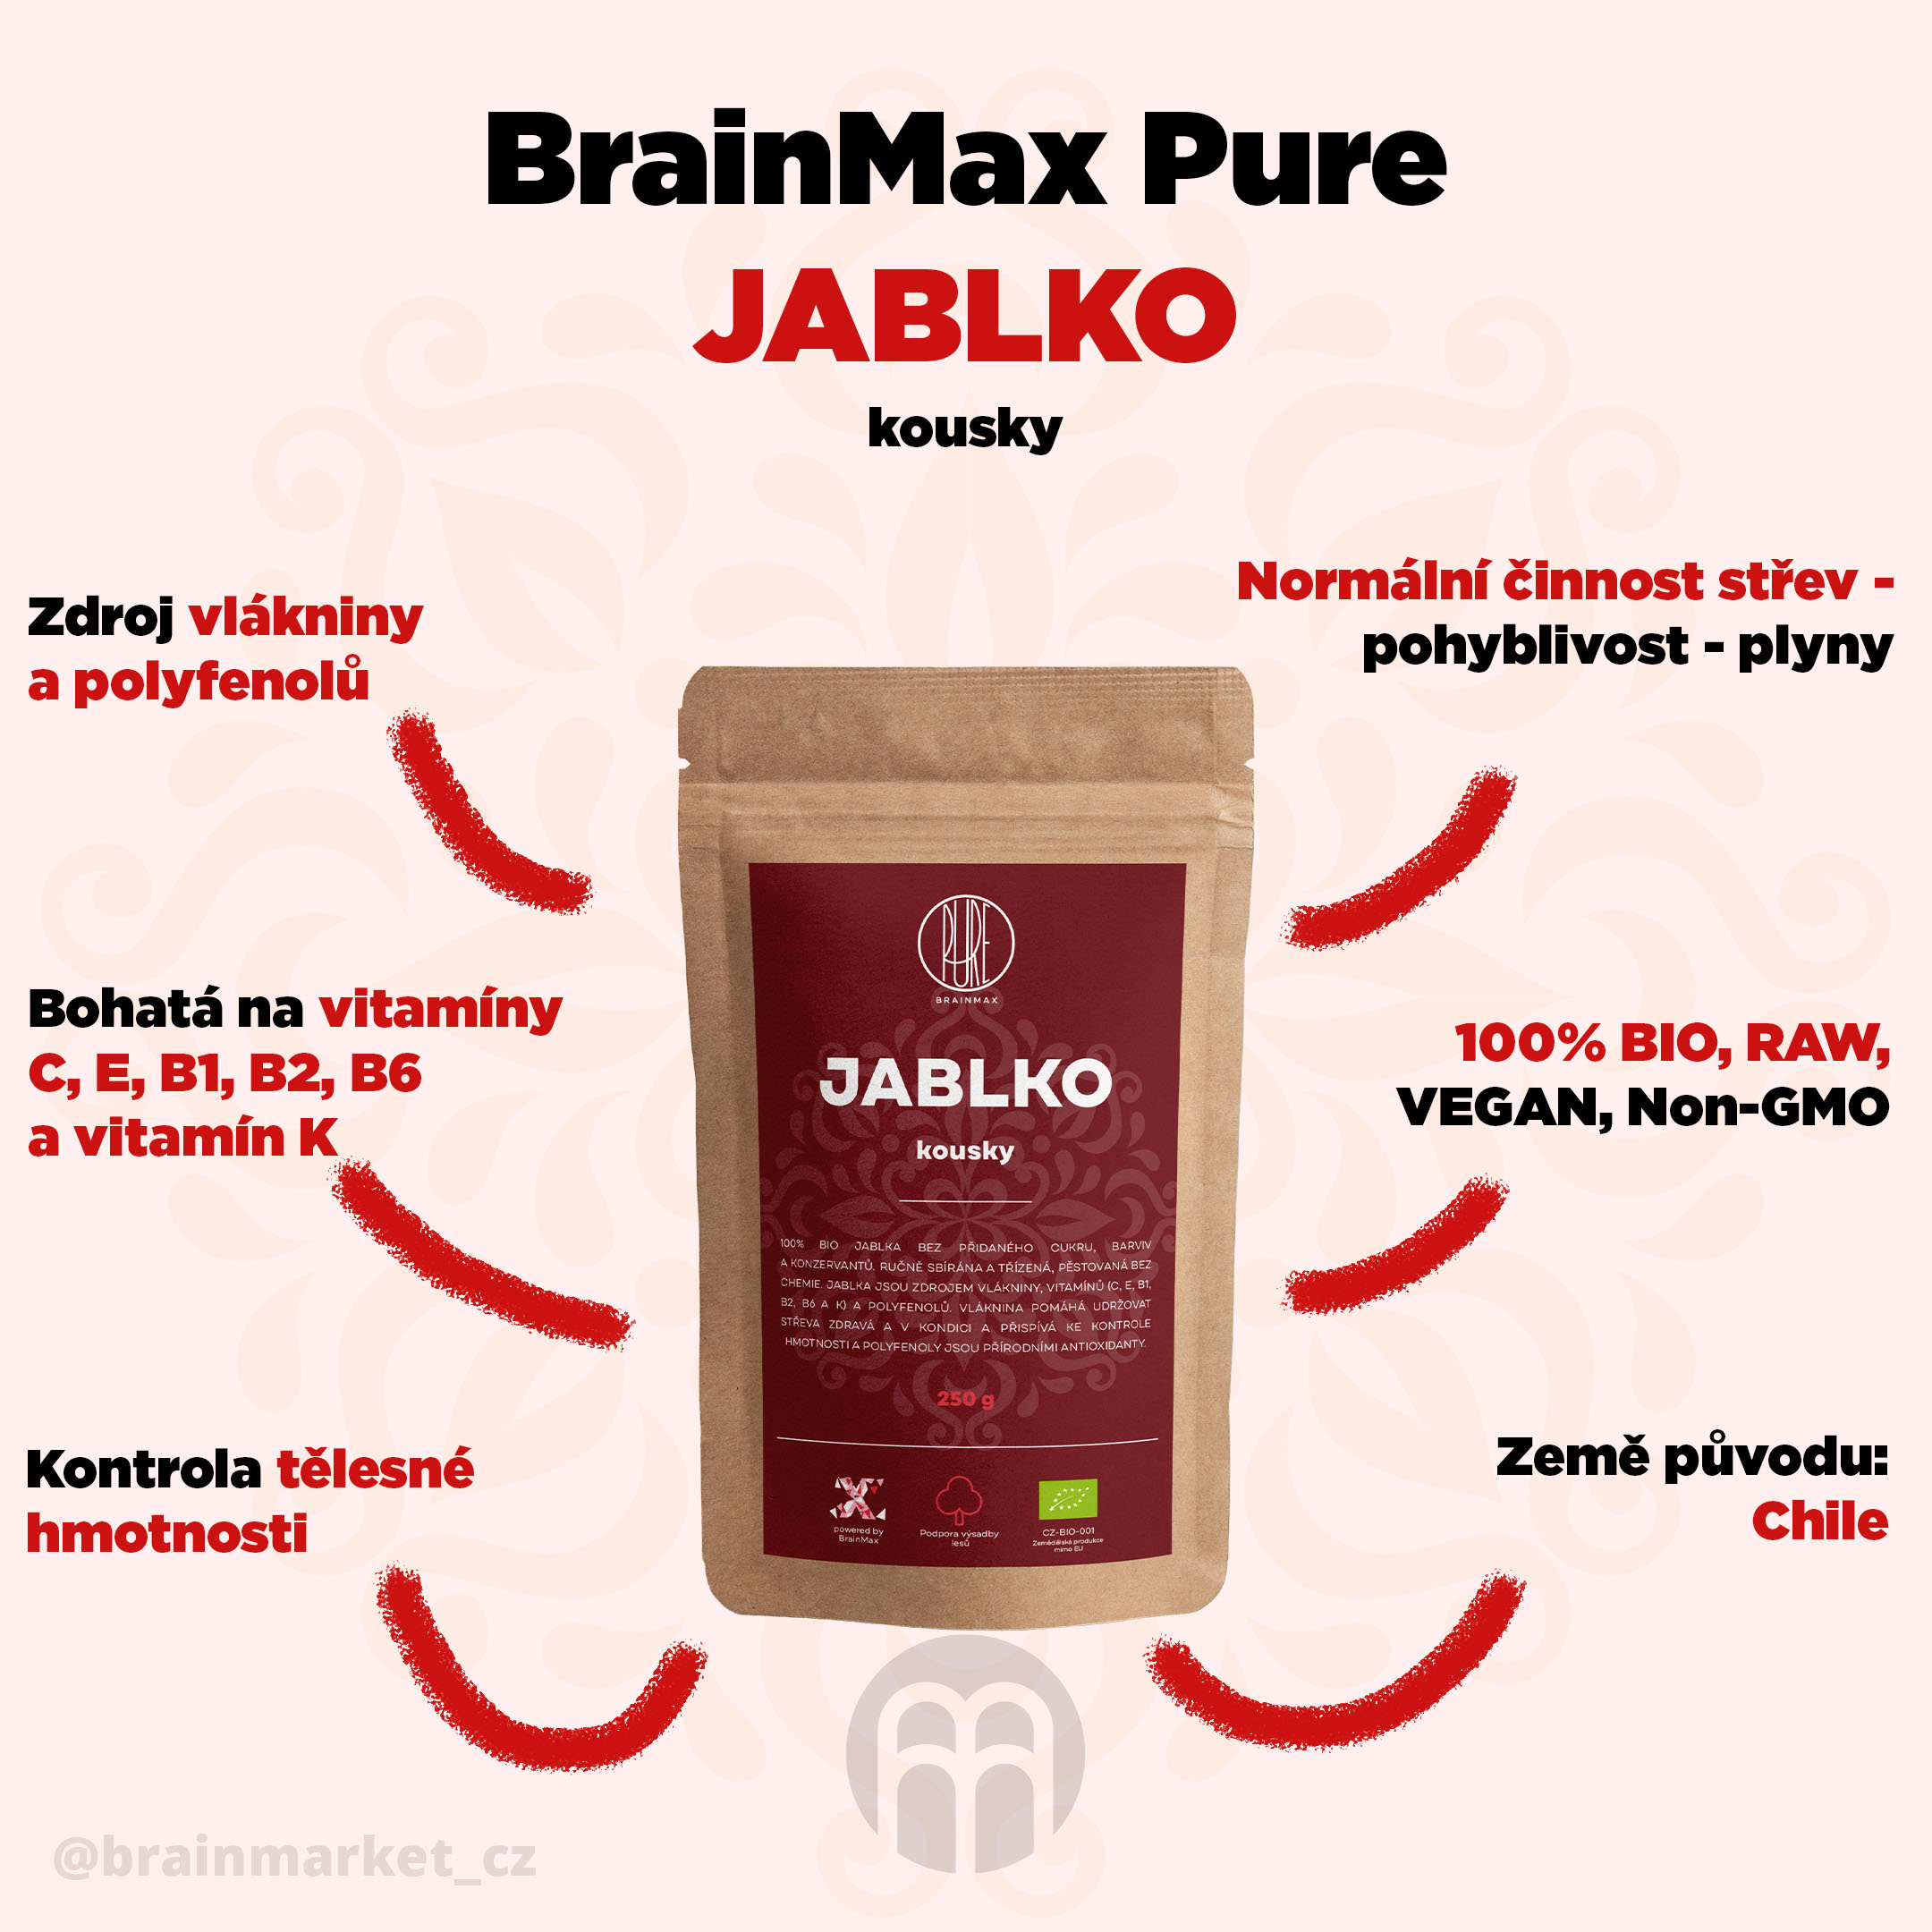 jablko-brainmax-pure-infografika-brainmarket-cz